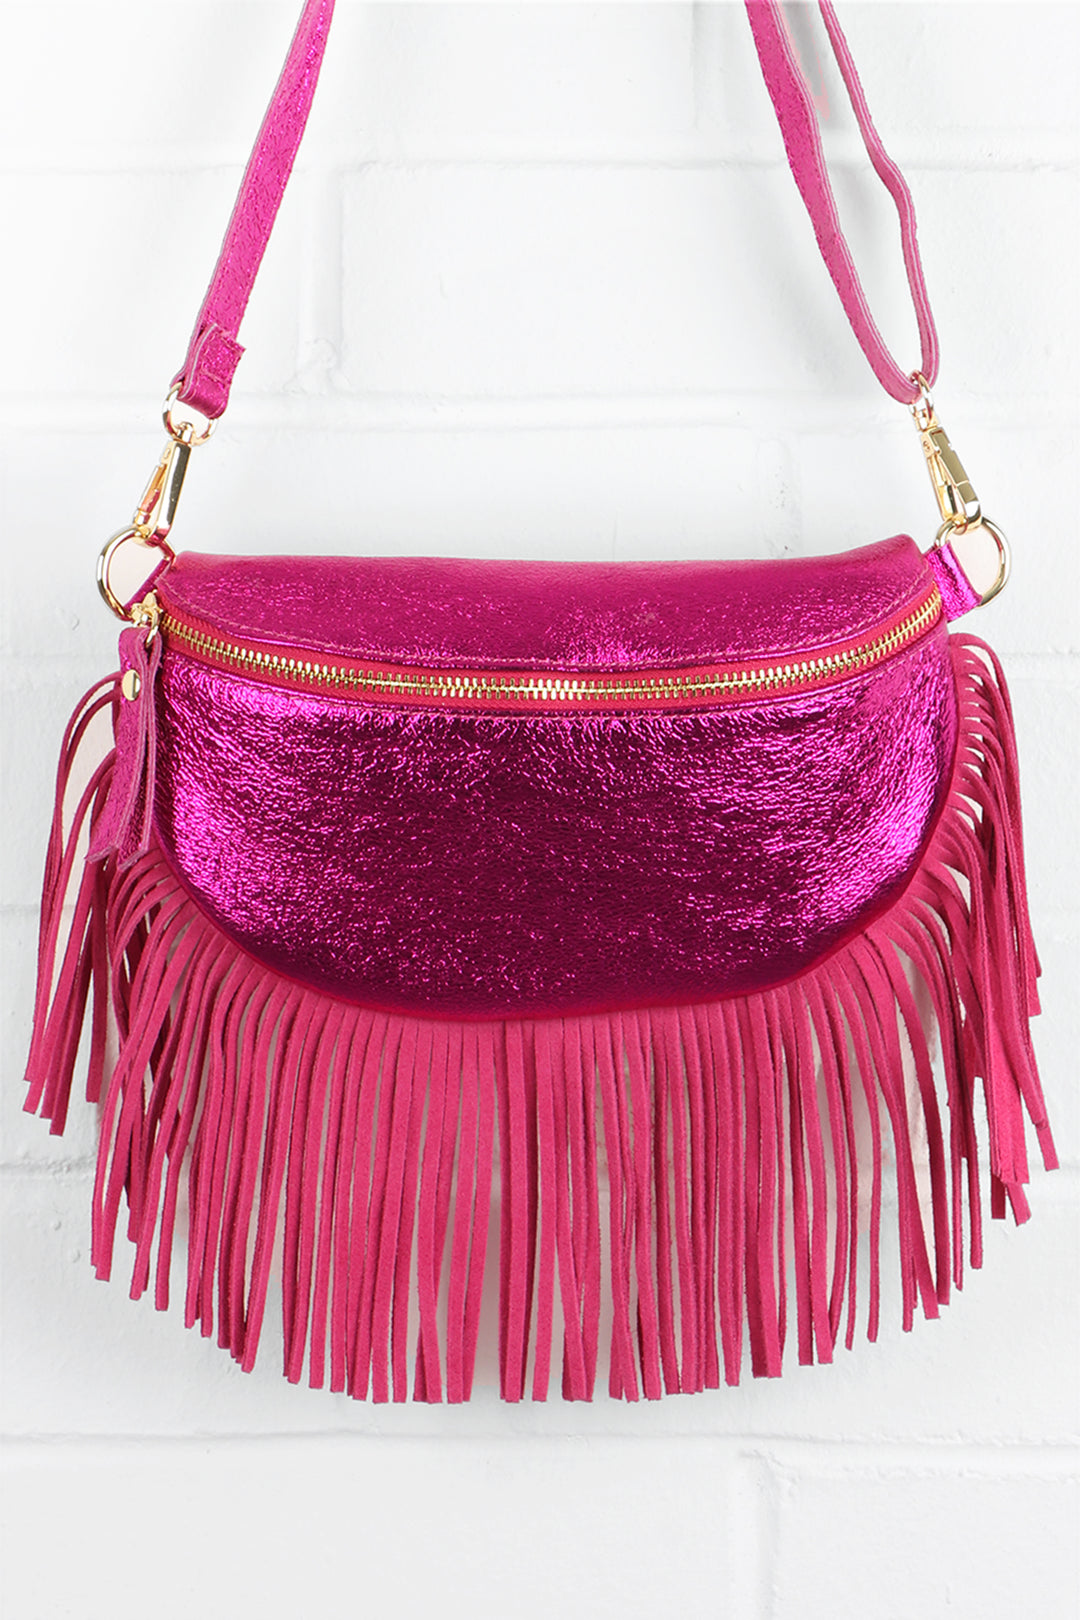 metallic raspberry pink leather halfmoon bag with fringed trim and zip closure